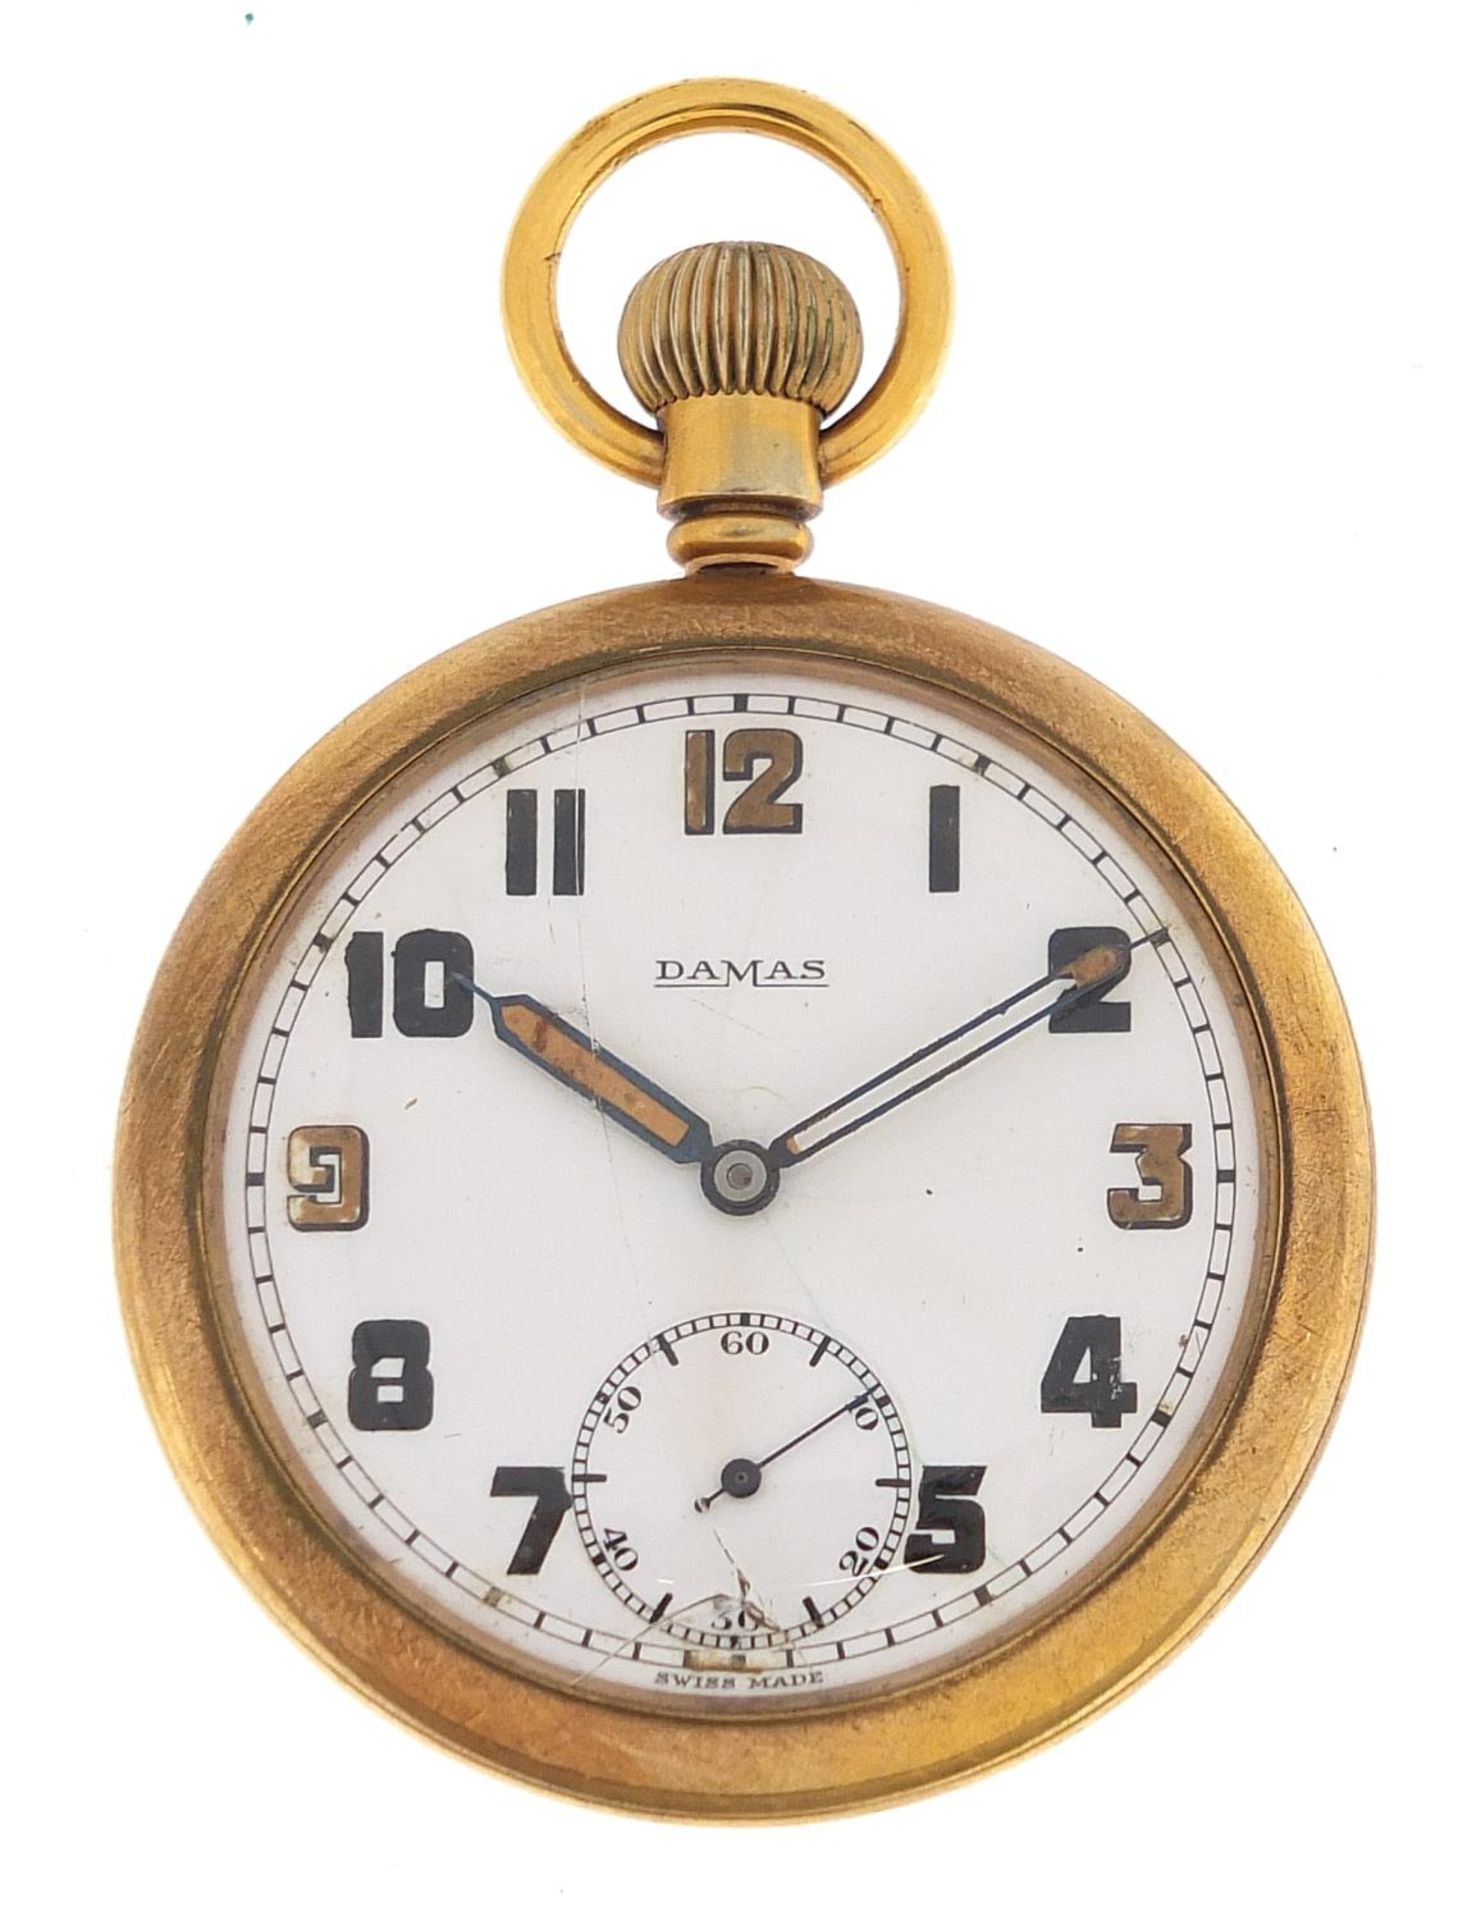 Damas, gentlemen's military interest gold plated open face pocket watch engraved G S/TP XX 189625,